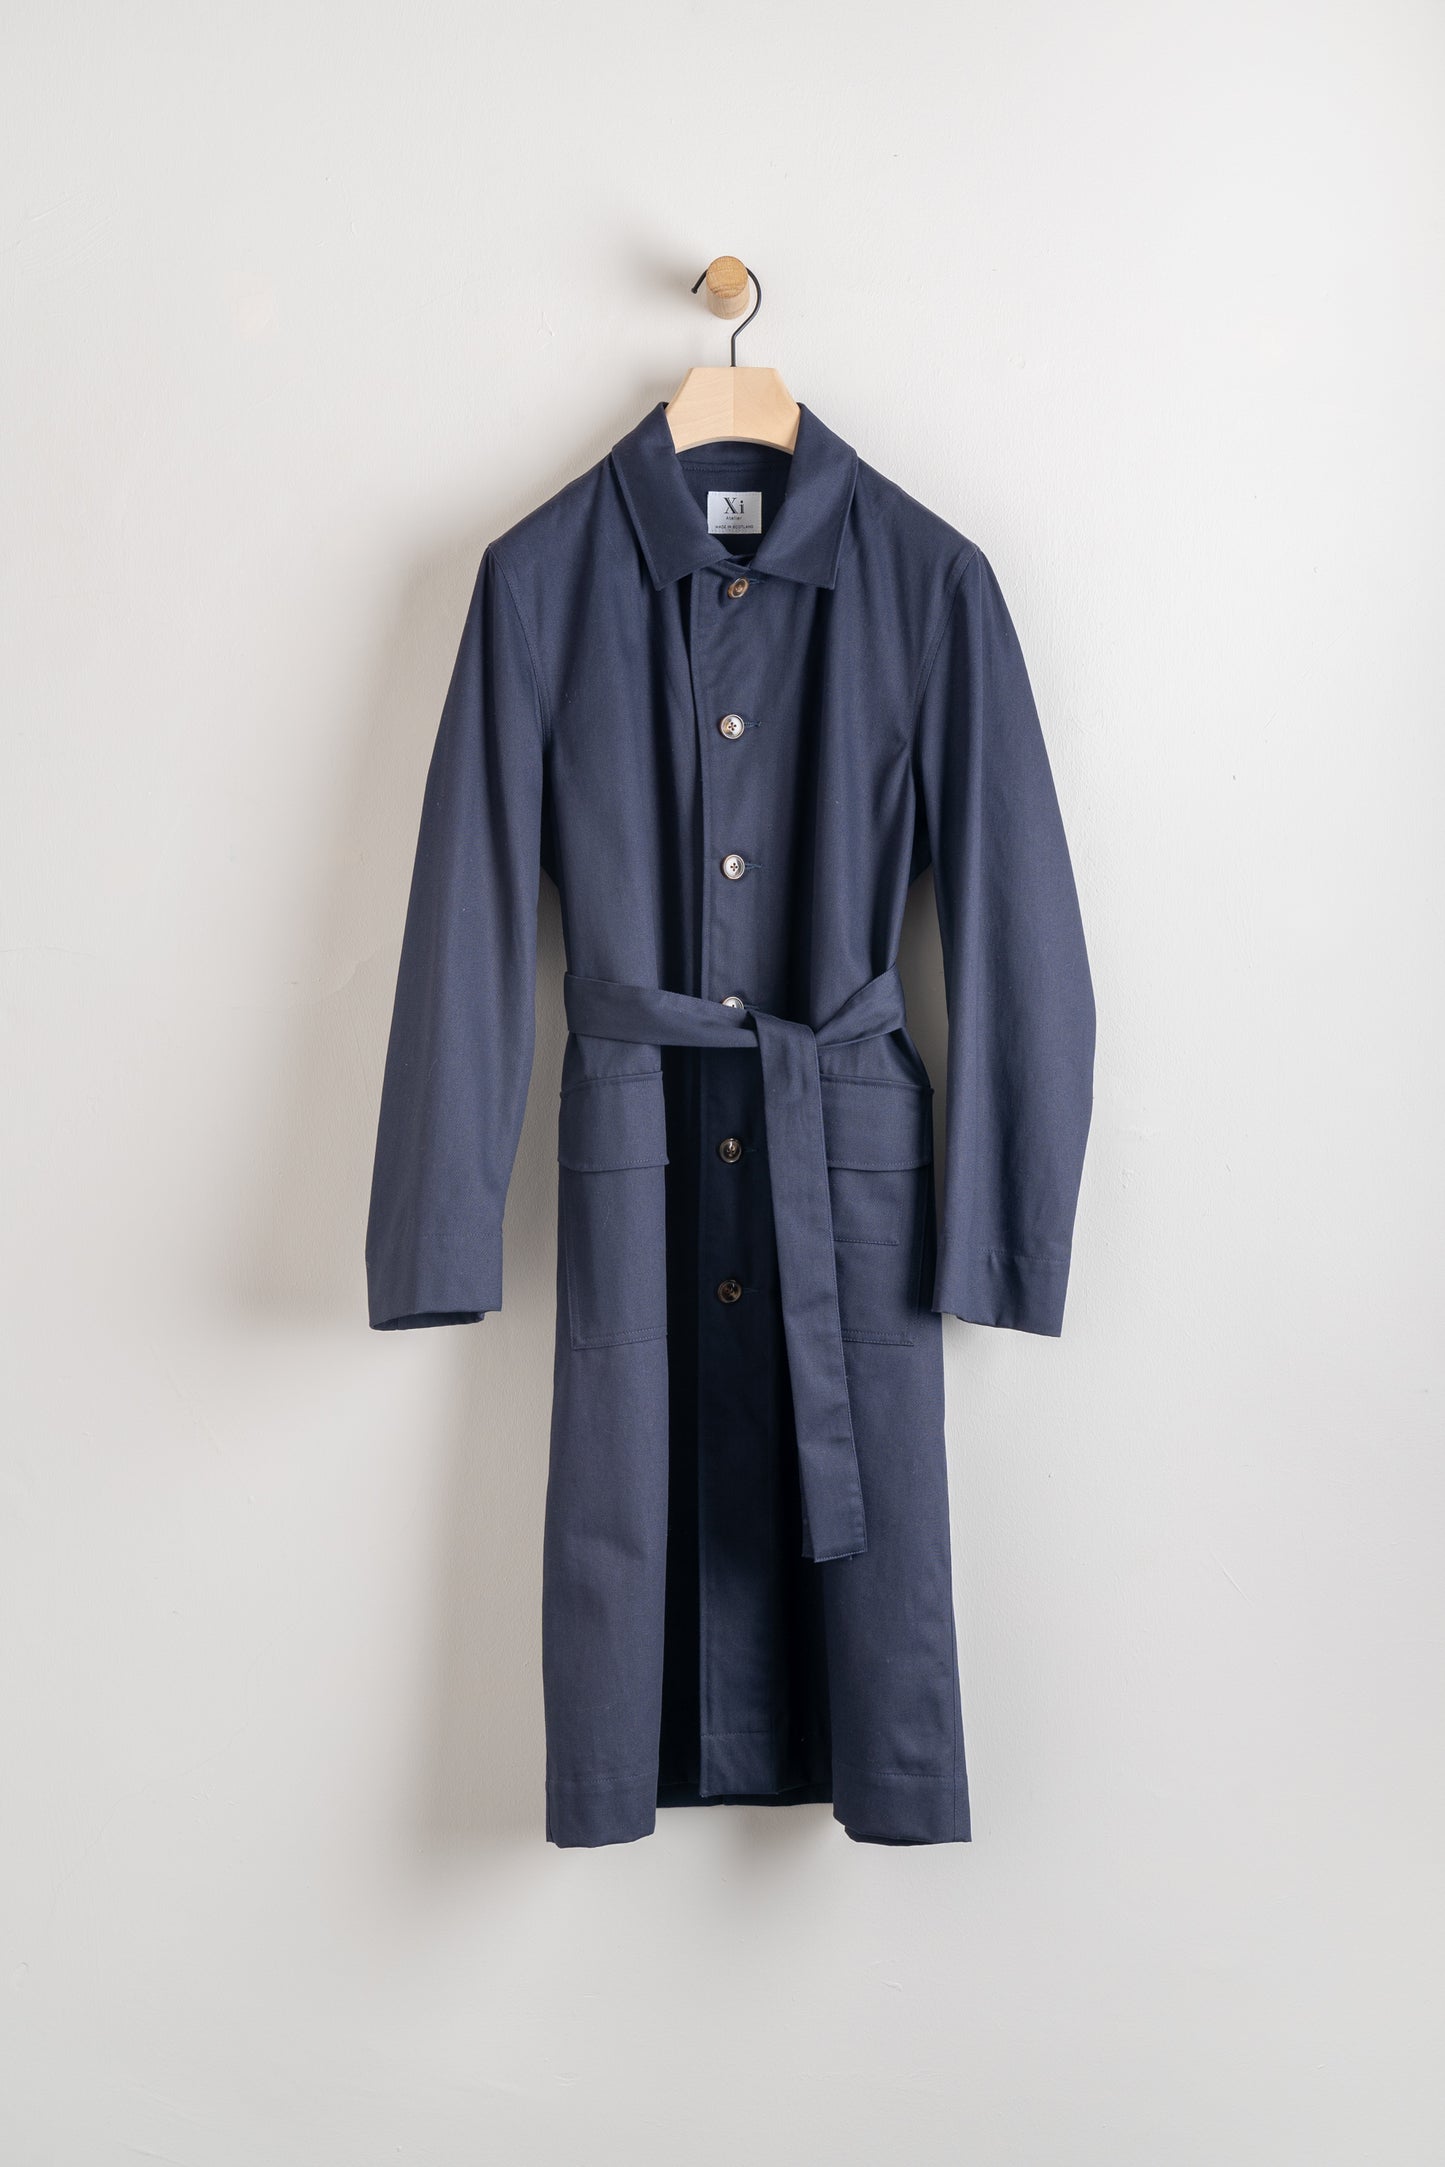 Xi Atelier Organic Cotton Yves Coat